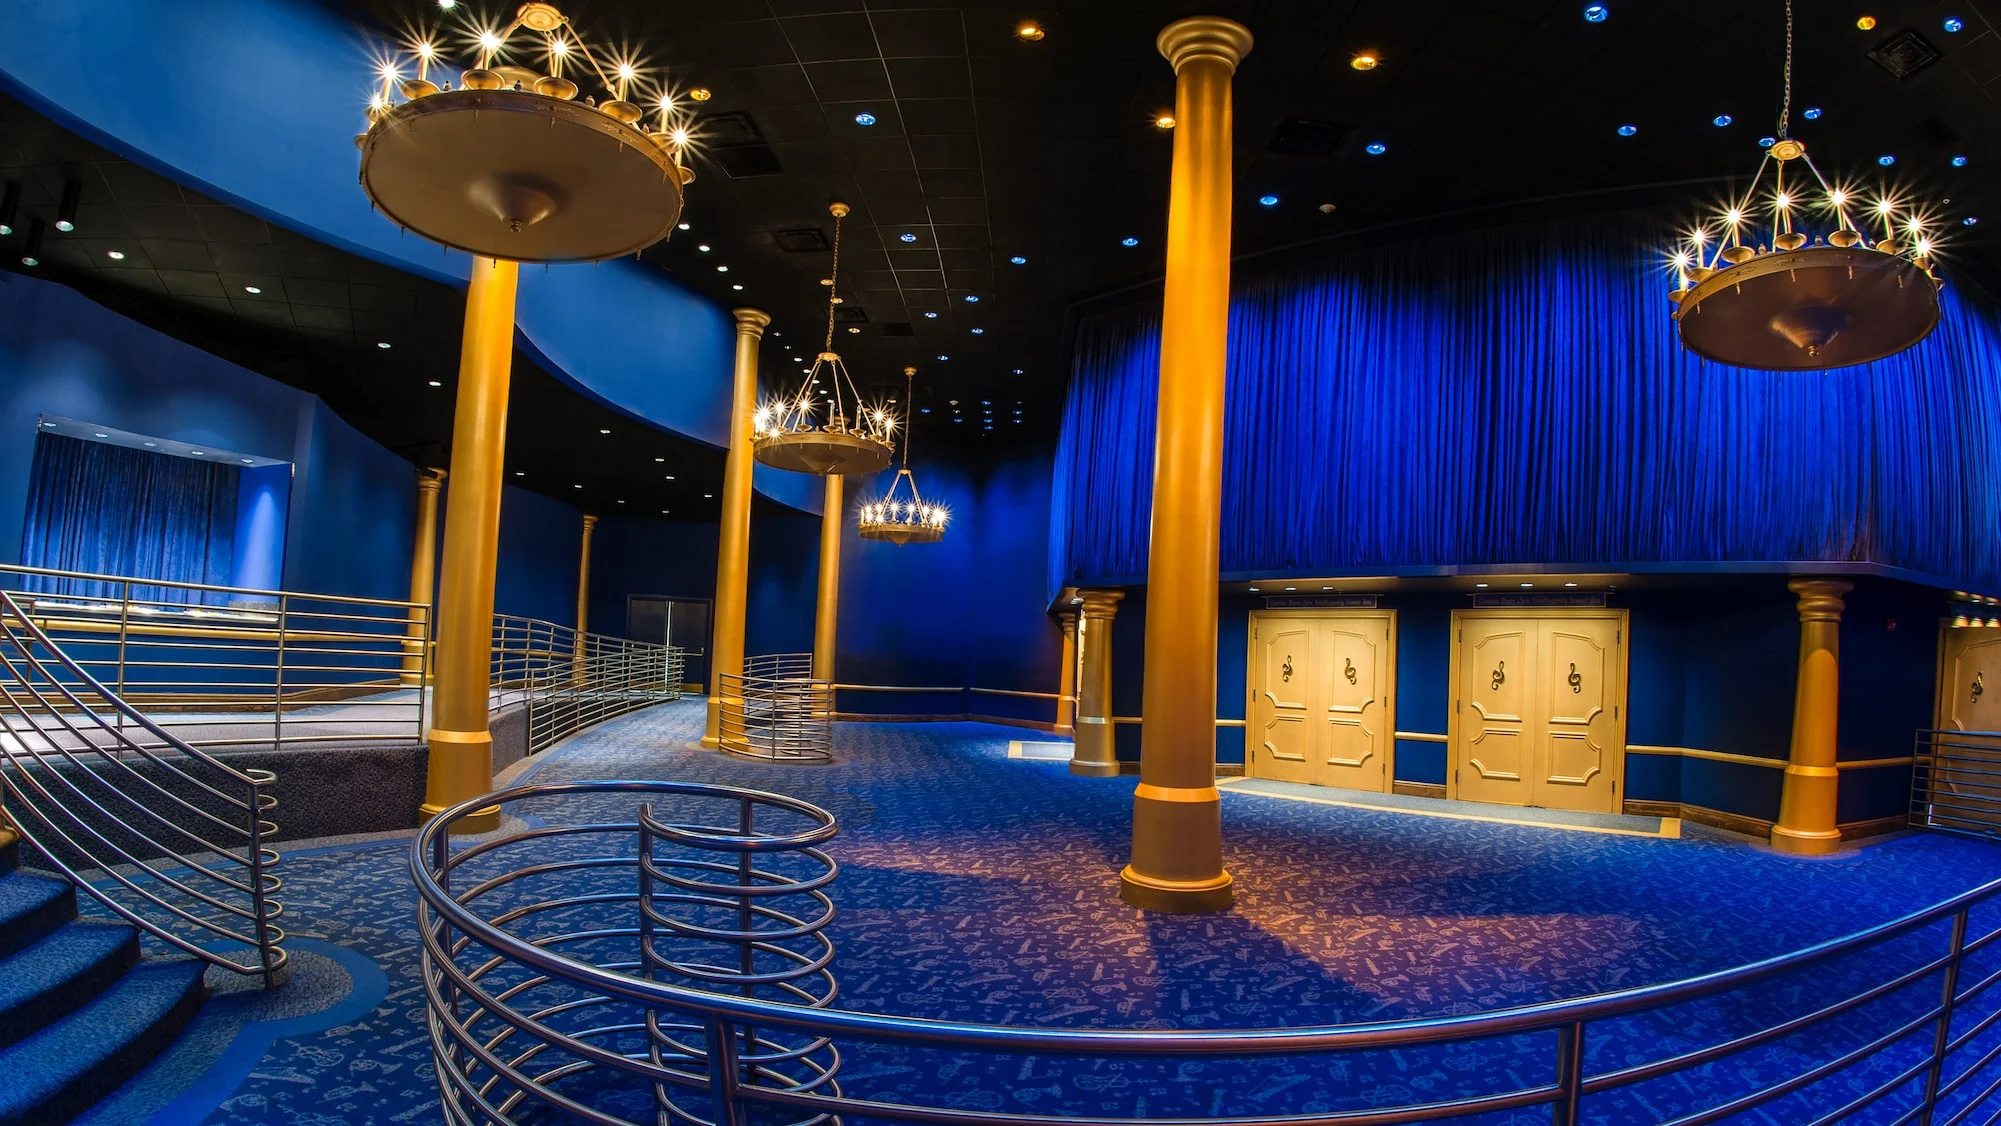 Row at Mickey's PhilharMagic - Magic Kingdom Attraction